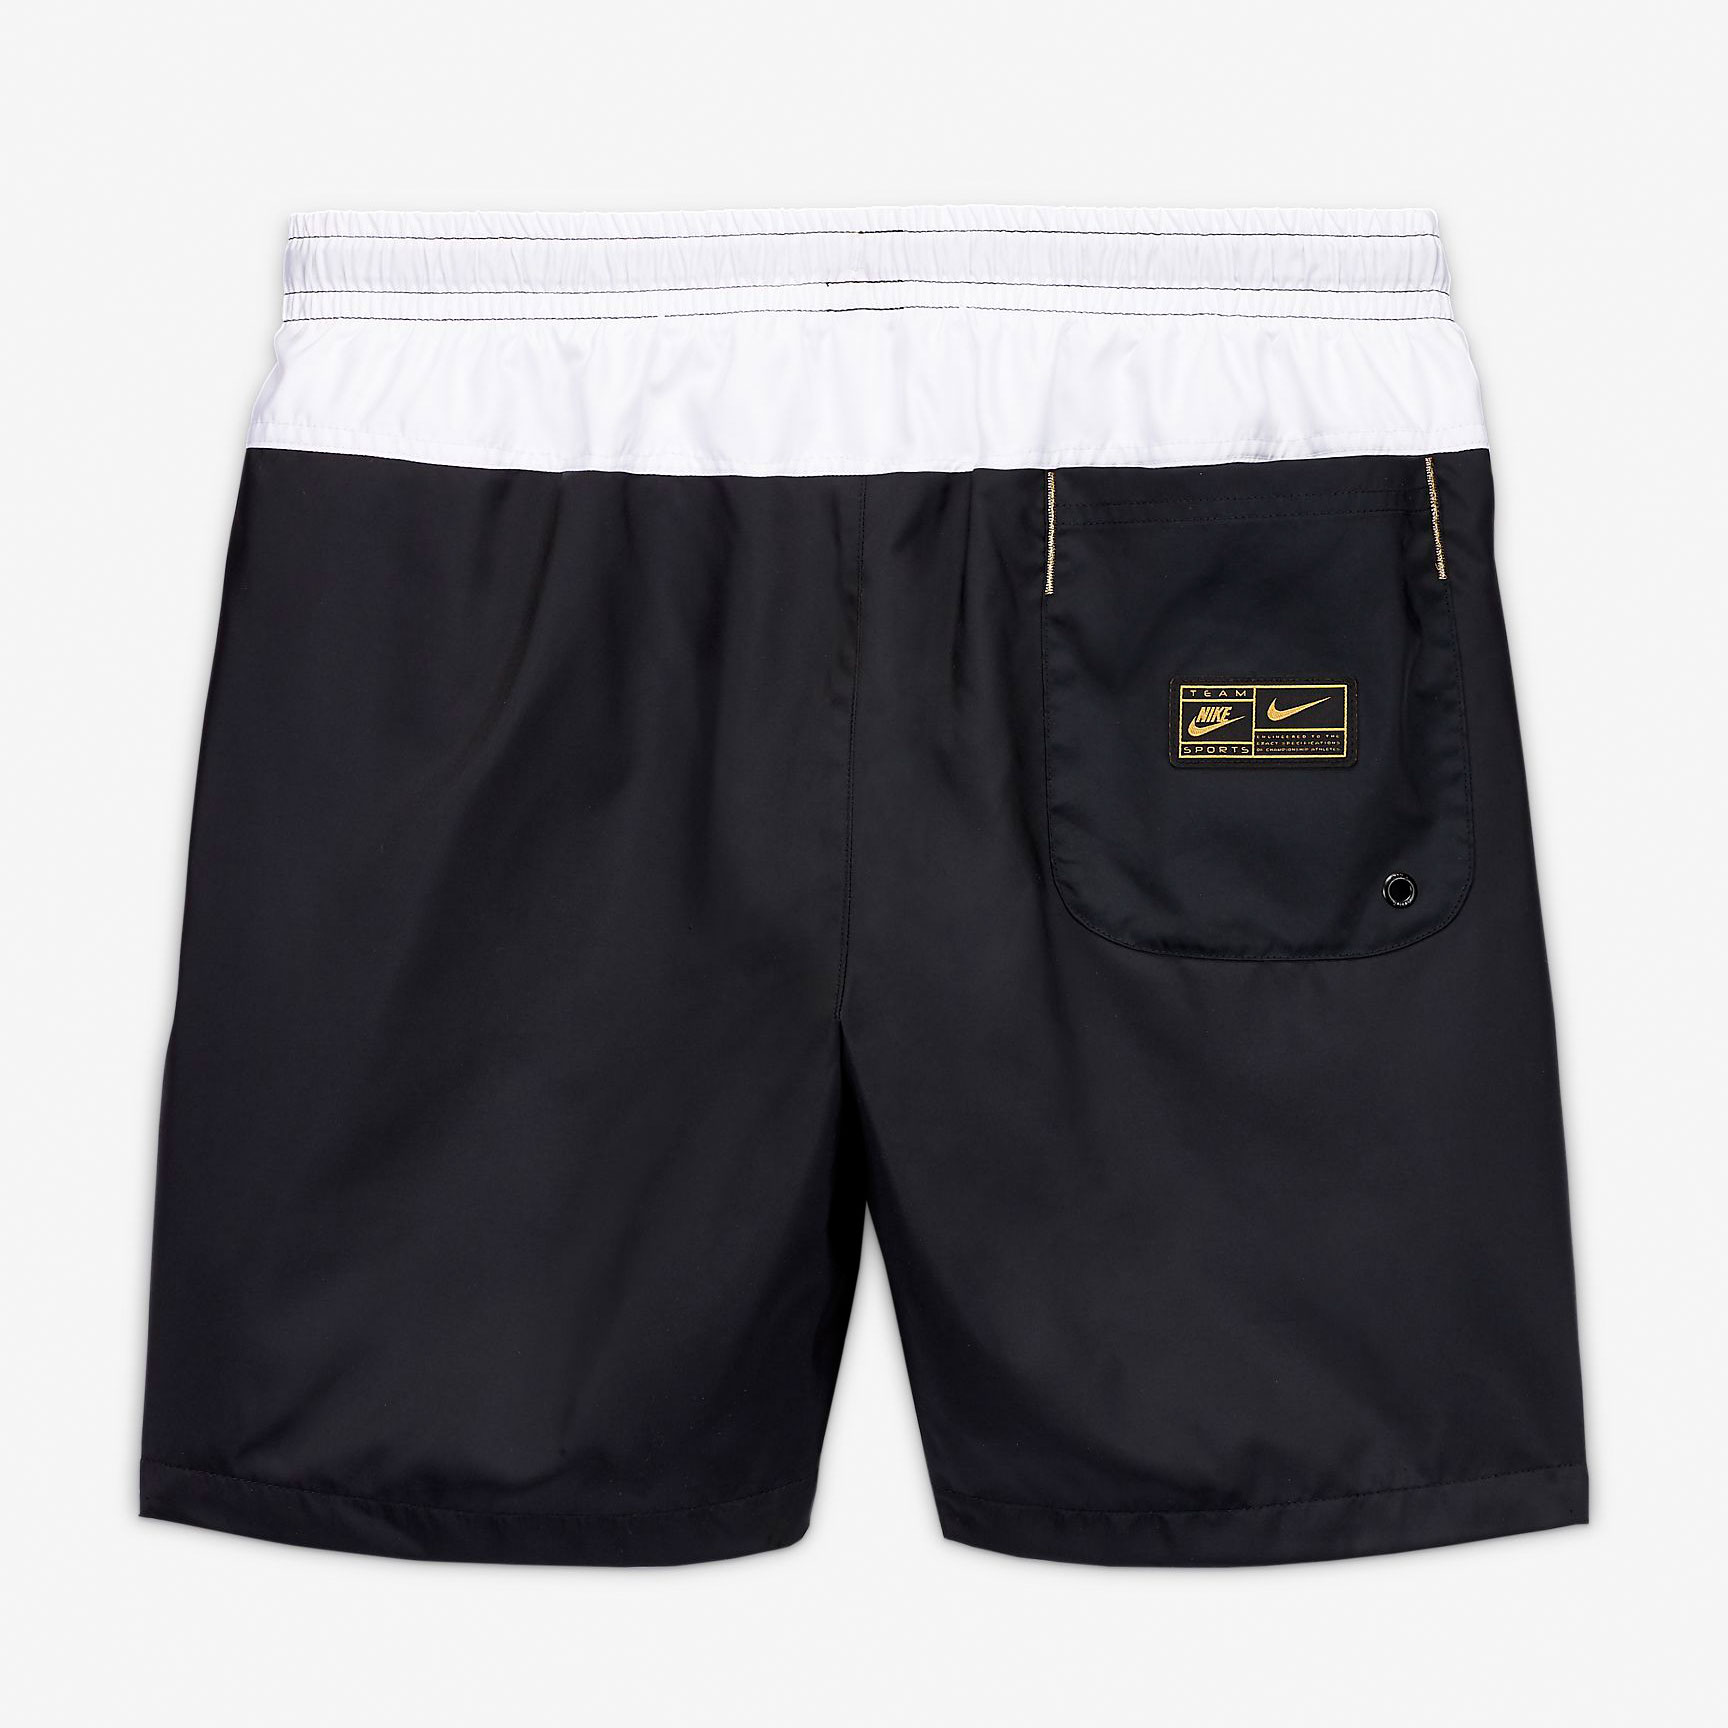 nike-shorts-black-white-gold-2